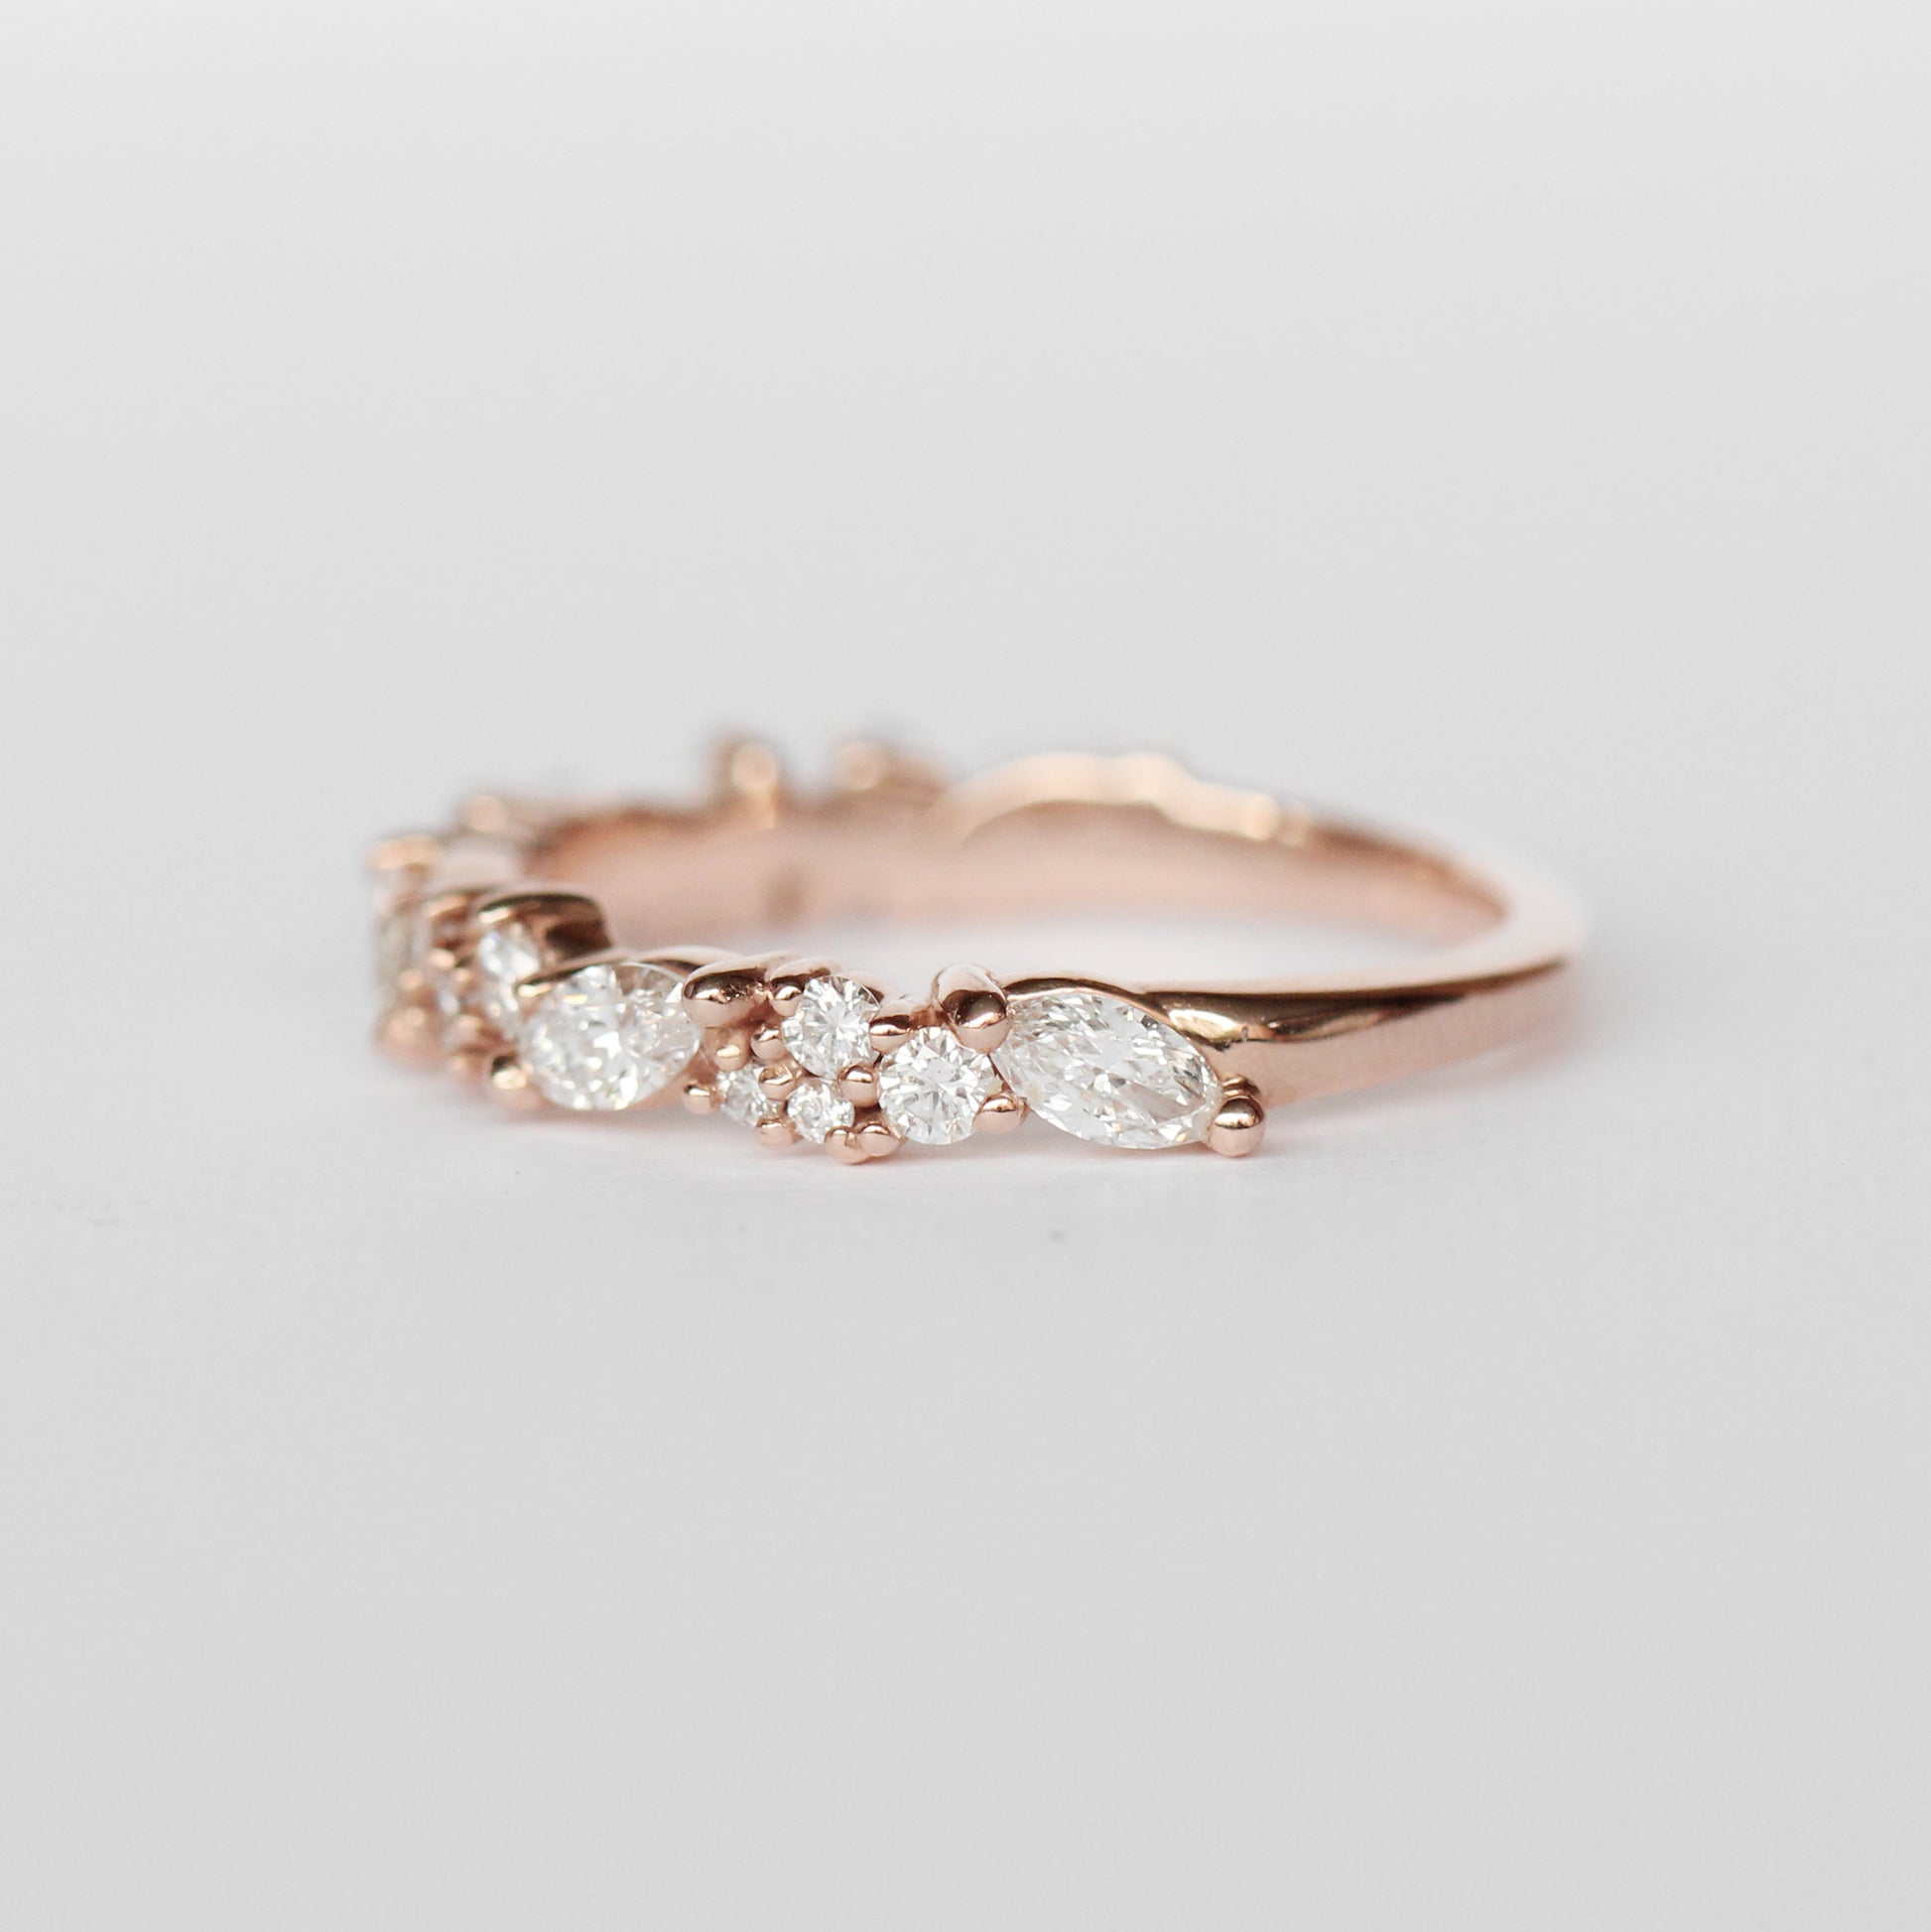 Genevieve Diamond Engagement Ring Band - White diamonds - Midwinter Co. Alternative Bridal Rings and Modern Fine Jewelry